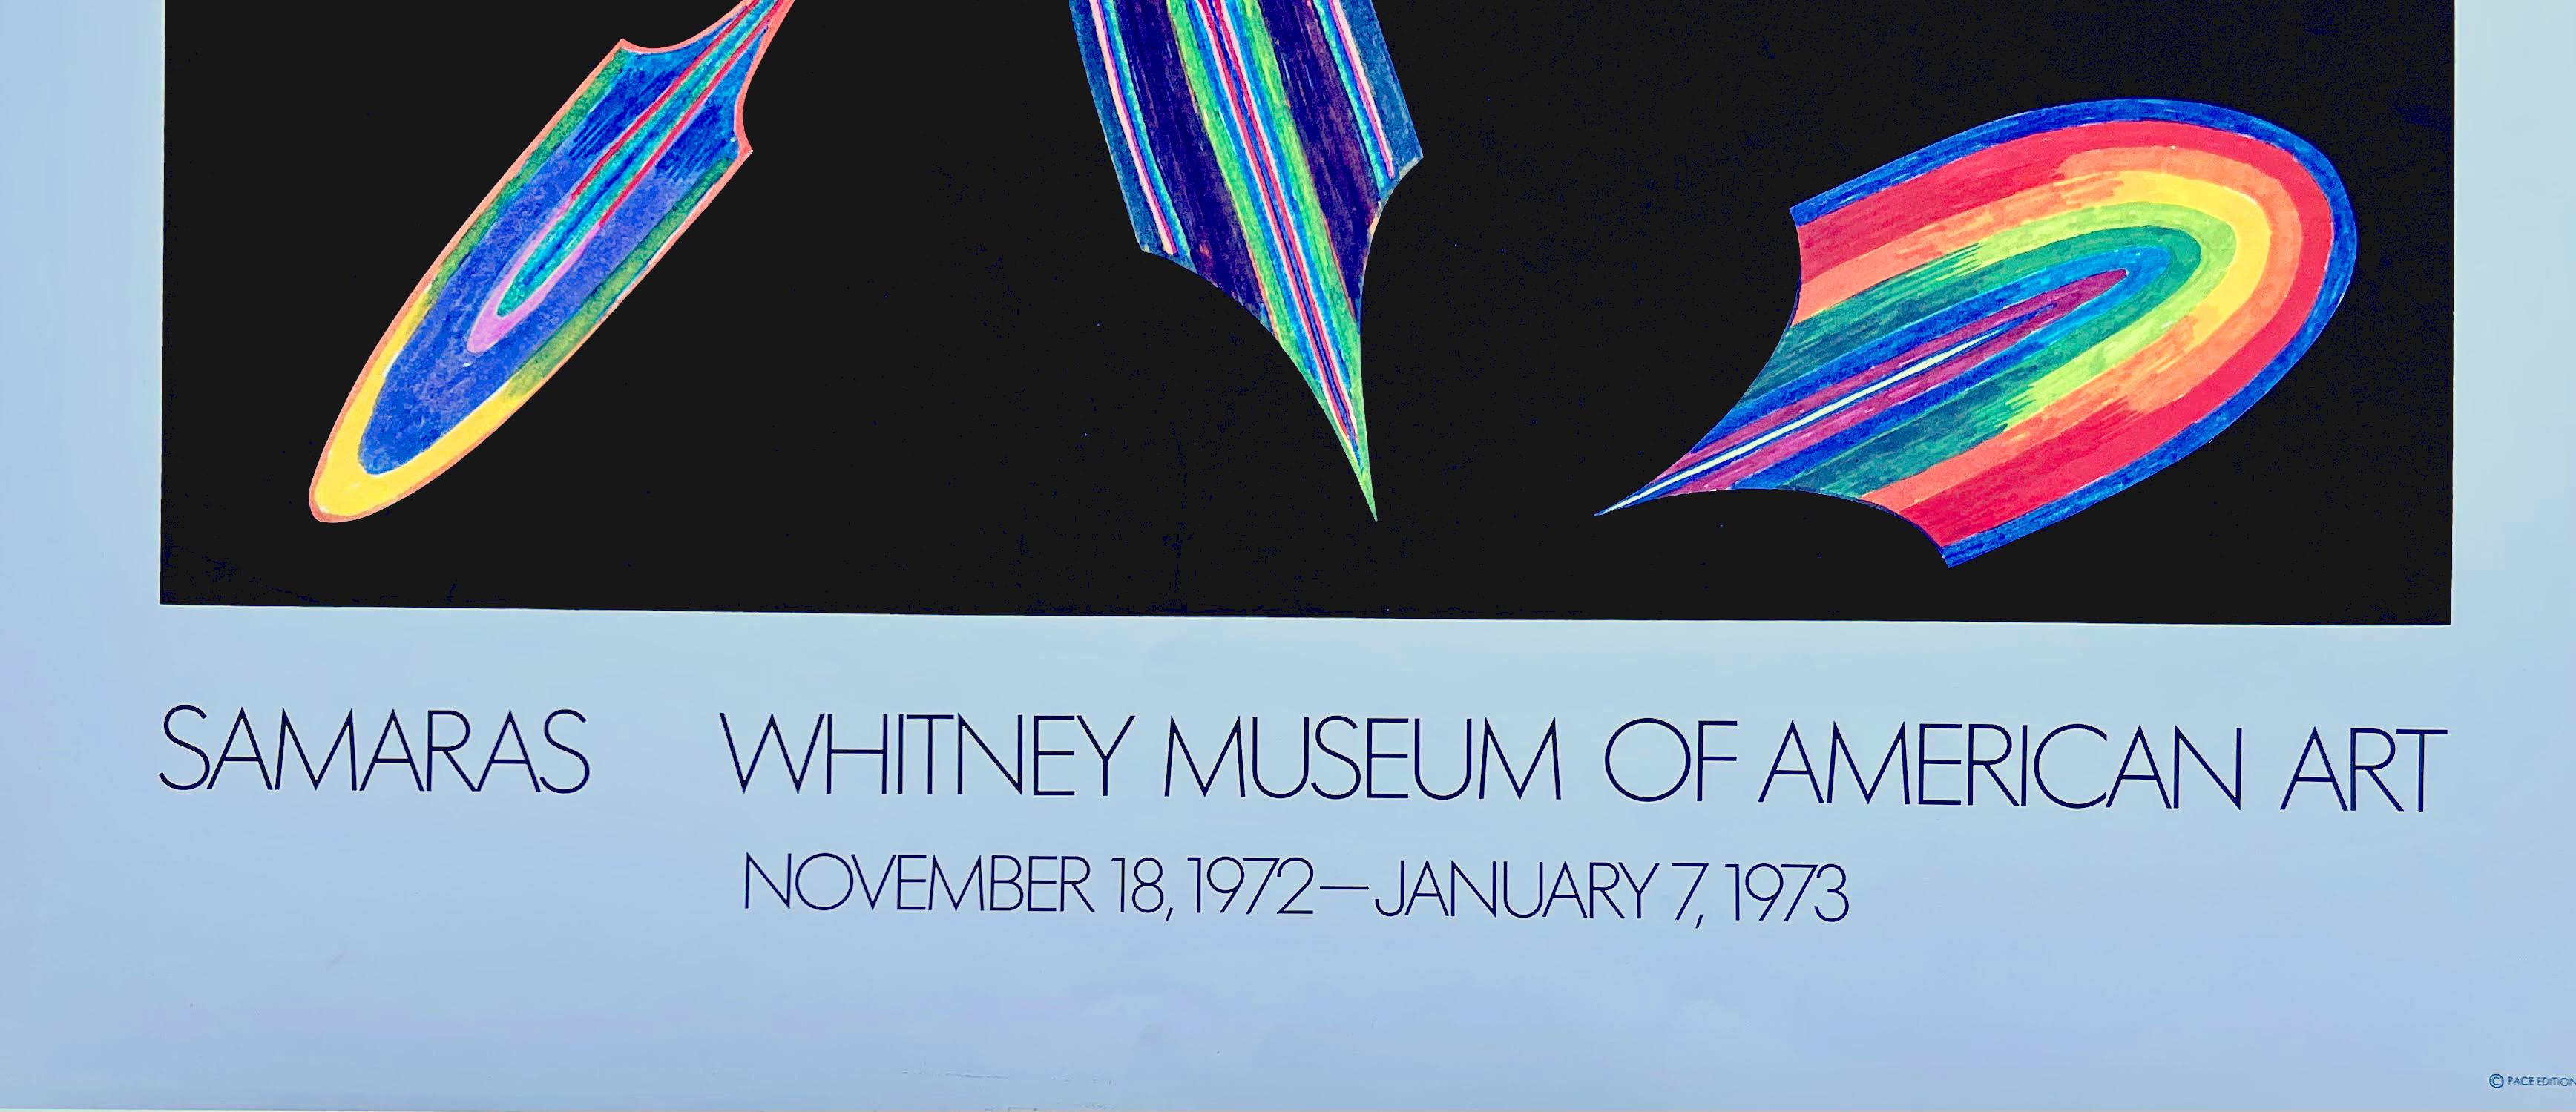 Lukas Samara
Samaras im Whitney Museum of American Art Ausstellungsplakat, 1973
Offsetlithografie-Poster
32 × 24 Zoll
Ungerahmt
Dieses frühe Vintage-Plakat wurde für die Samaras-Ausstellung im Whitney Museum of American Art vom 18. November bis 7.